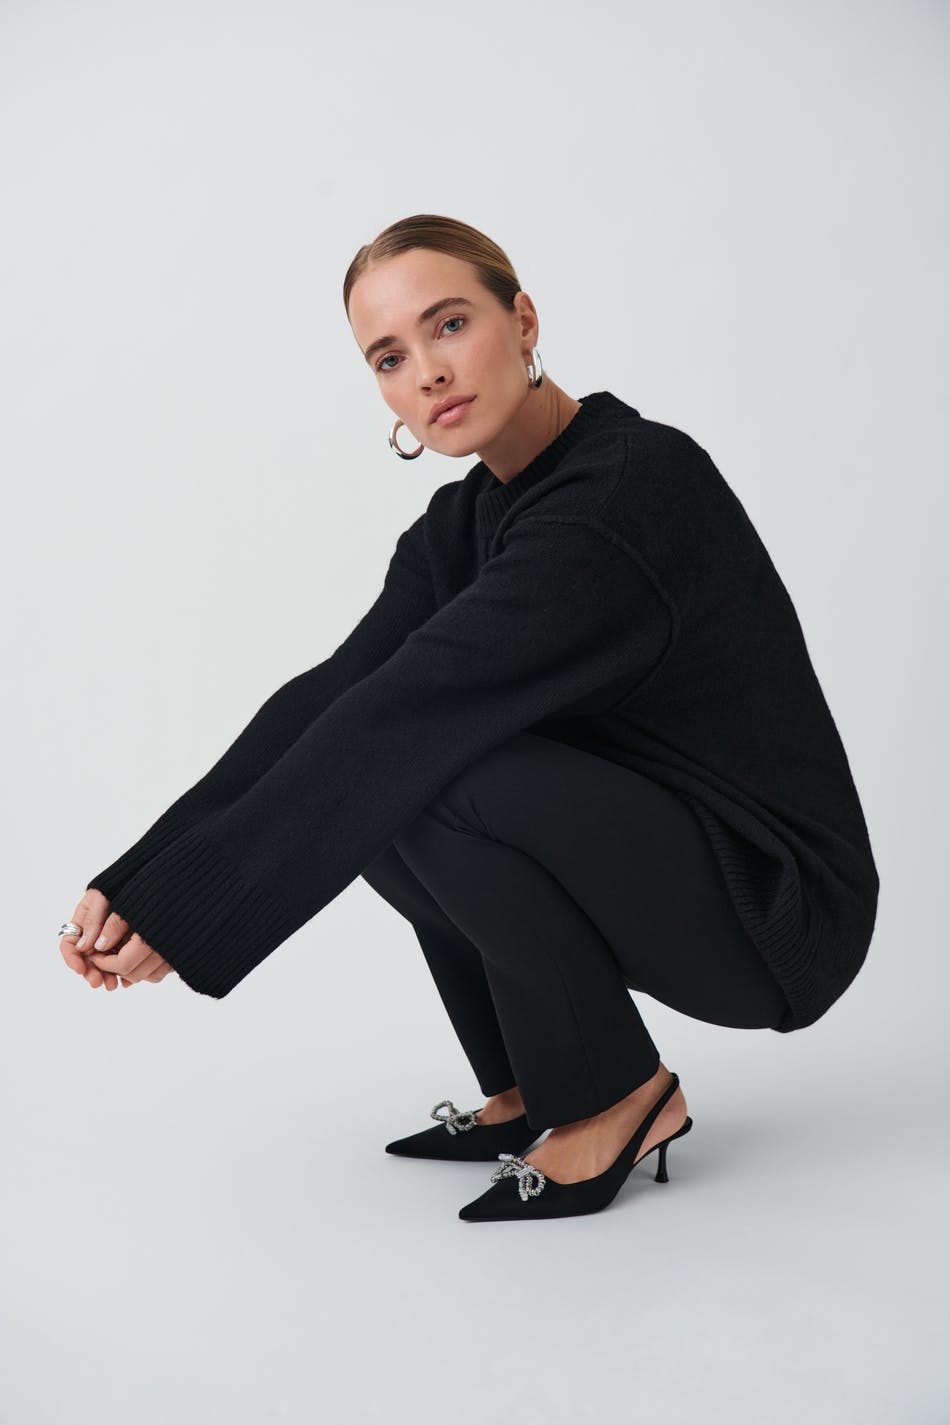 Gina Tricot - Knitted sweater - stickade tröjor - Black - S - Female